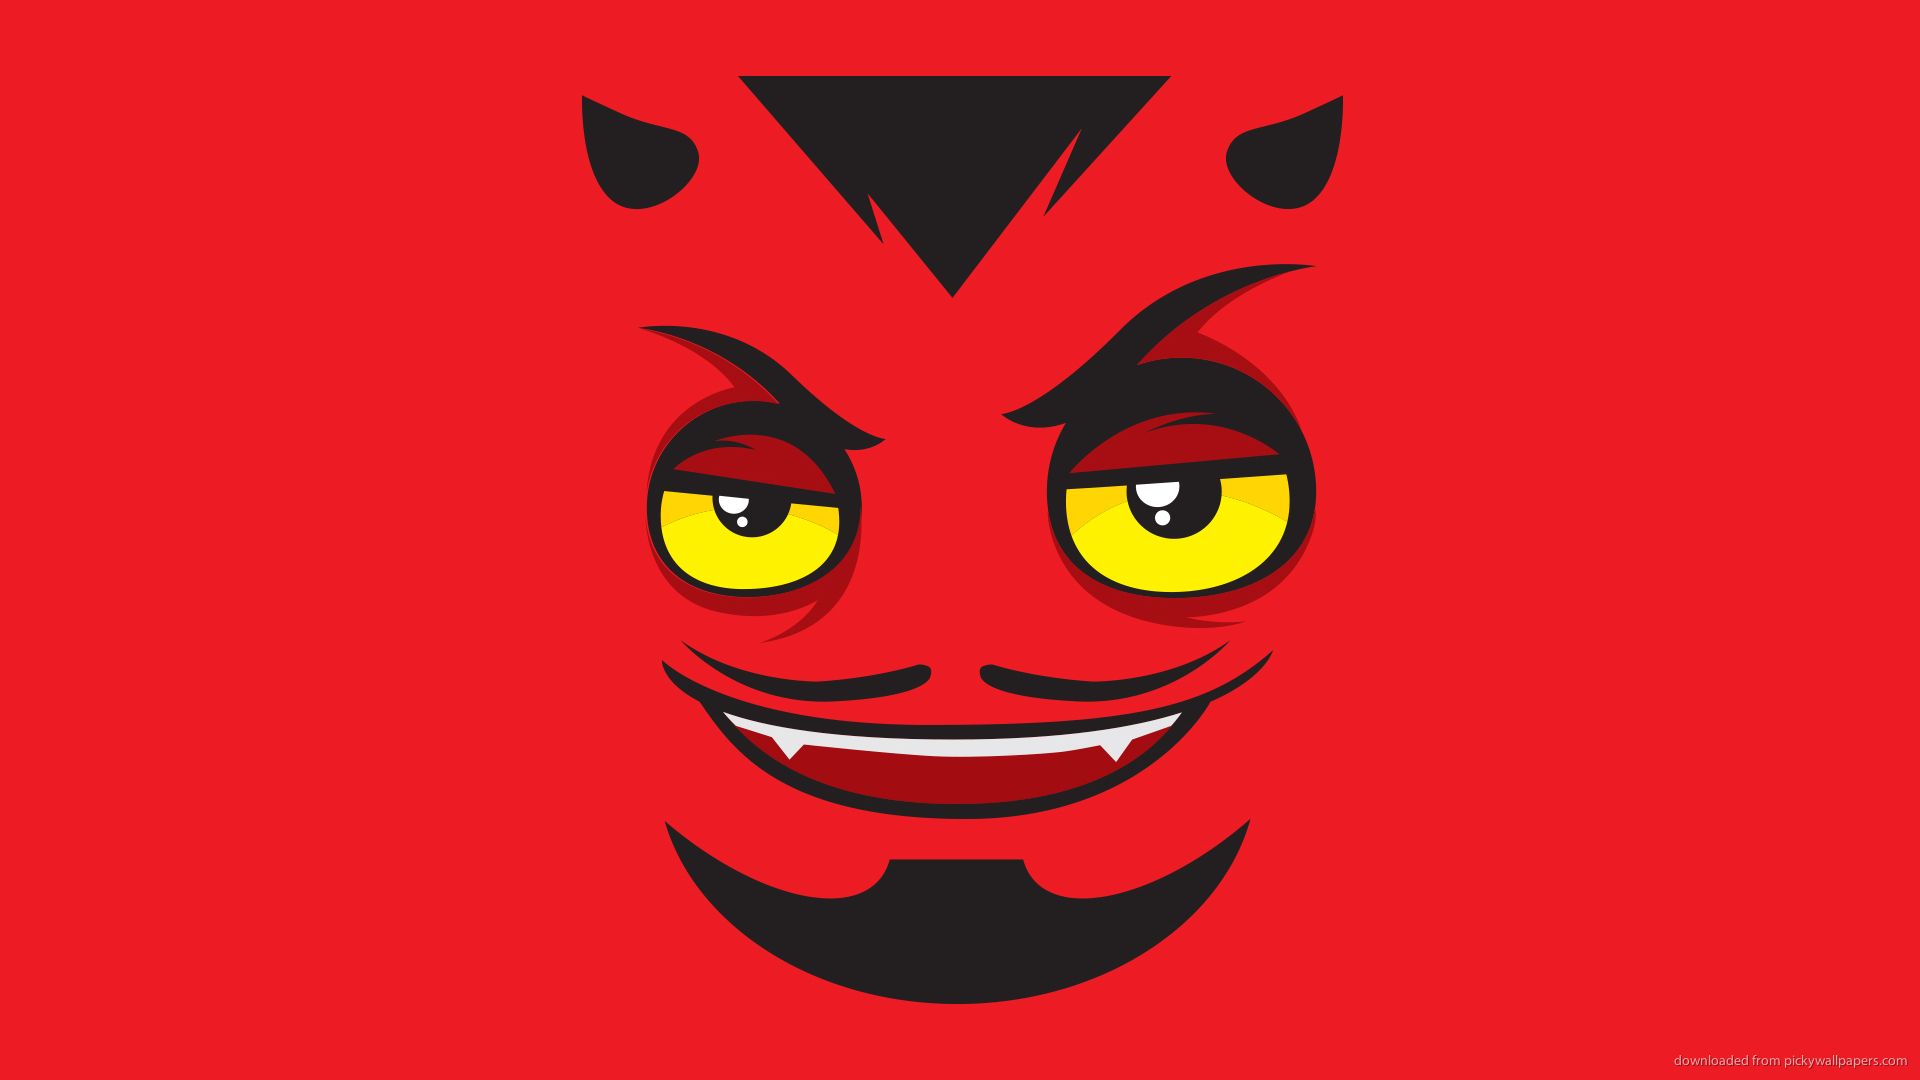 Devil's Smile Wallpaper For iPhone 4